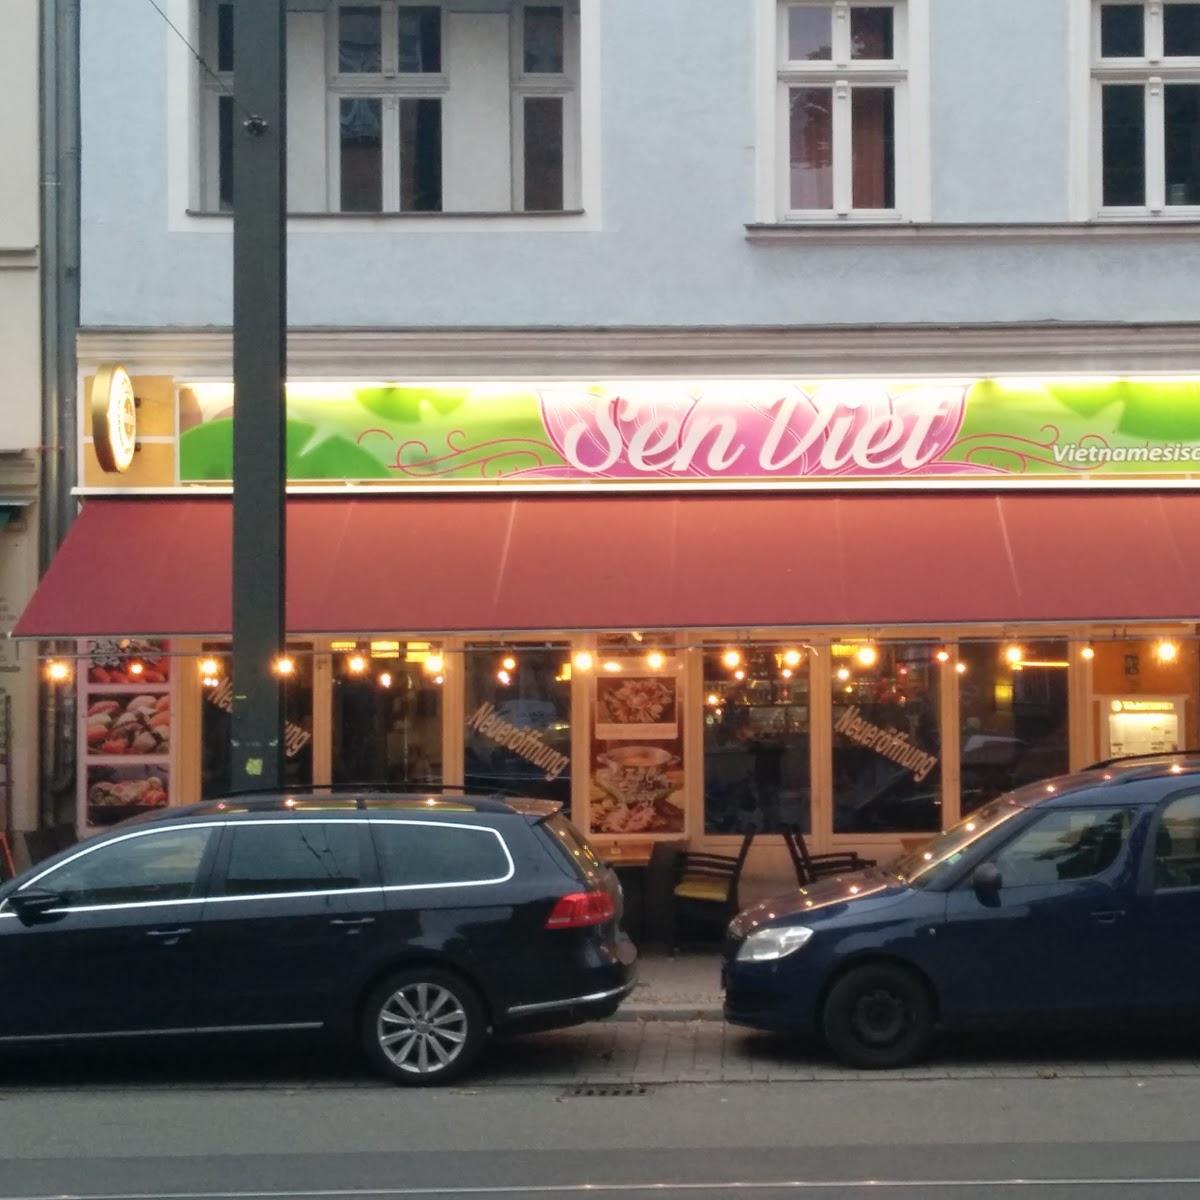 Restaurant "Sen Viet Restaurant" in  Berlin